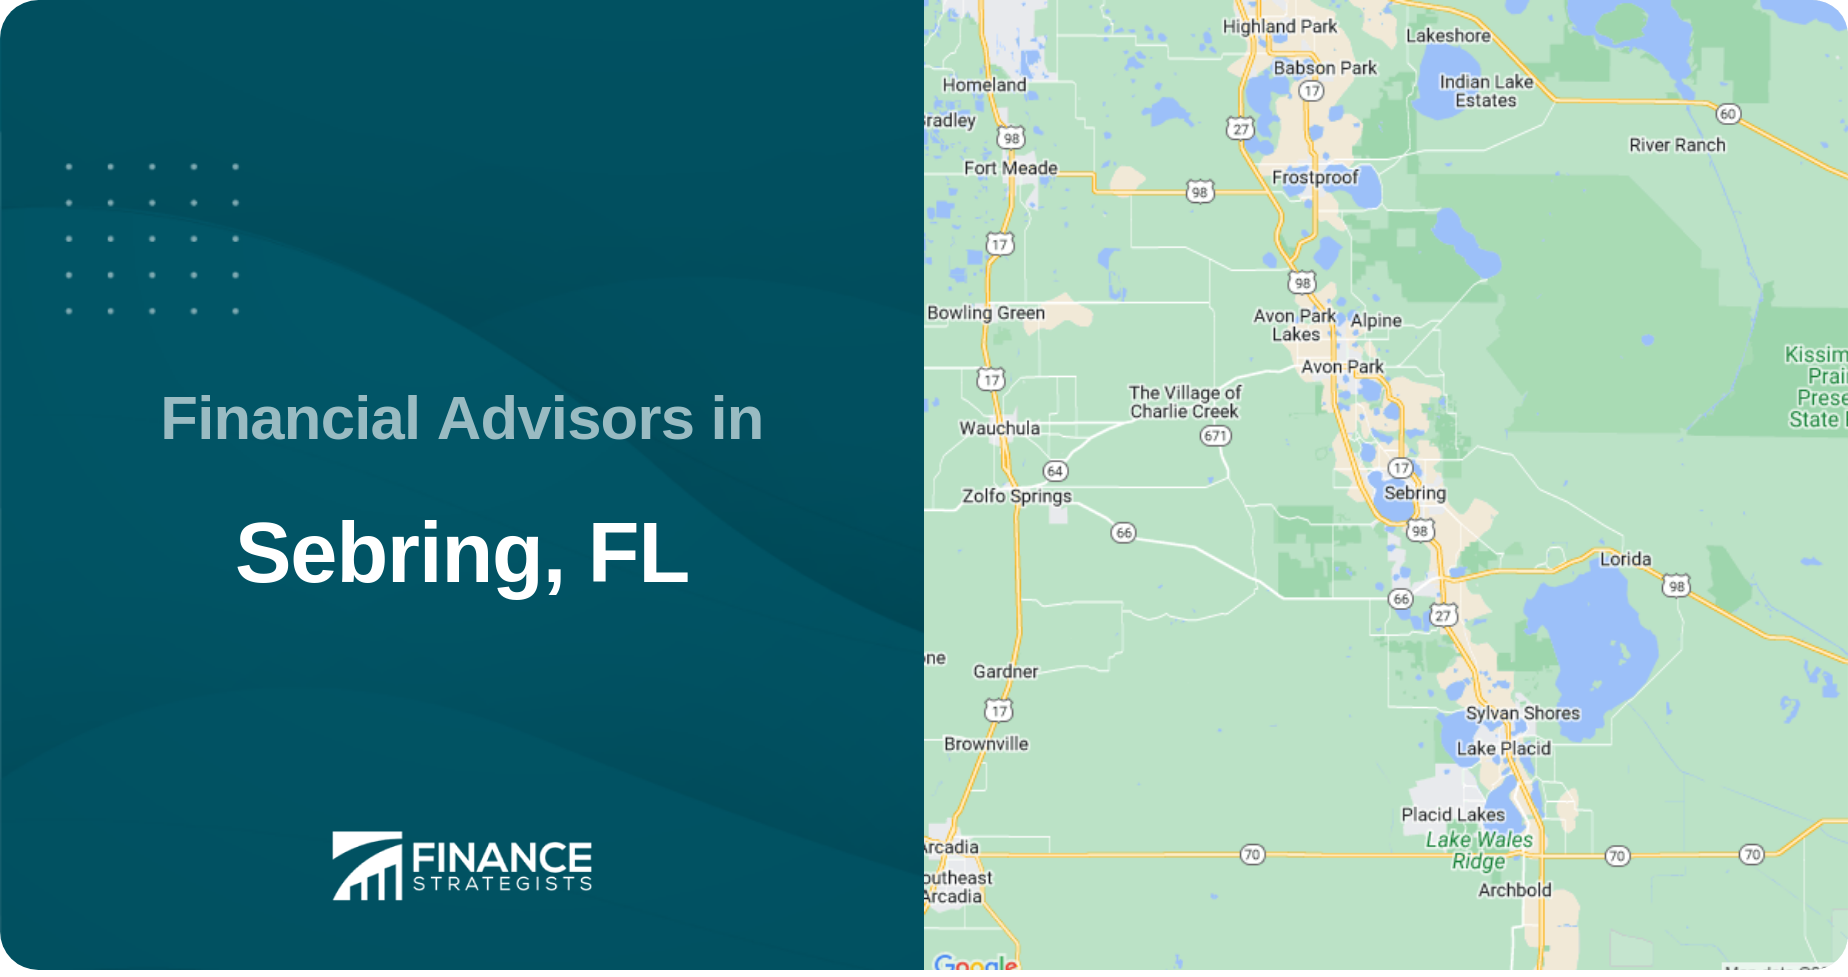 Financial Advisors in Sebring, FL